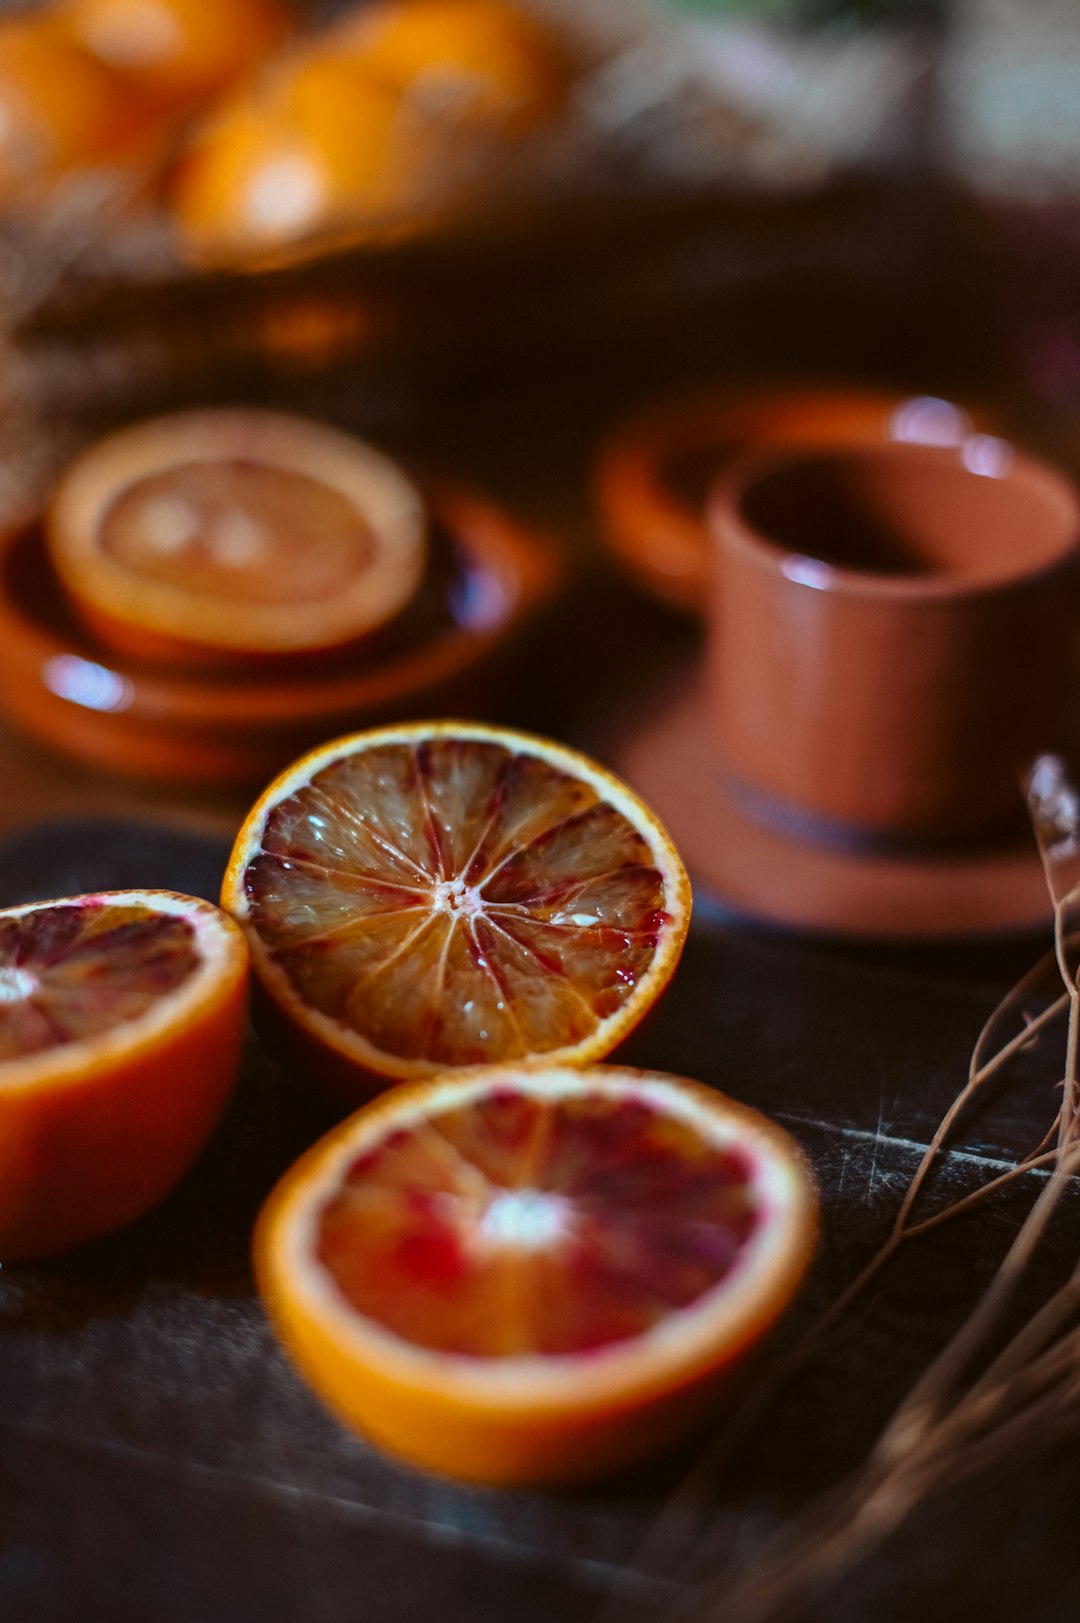 sliced orange fruit beside brown ceramic mug